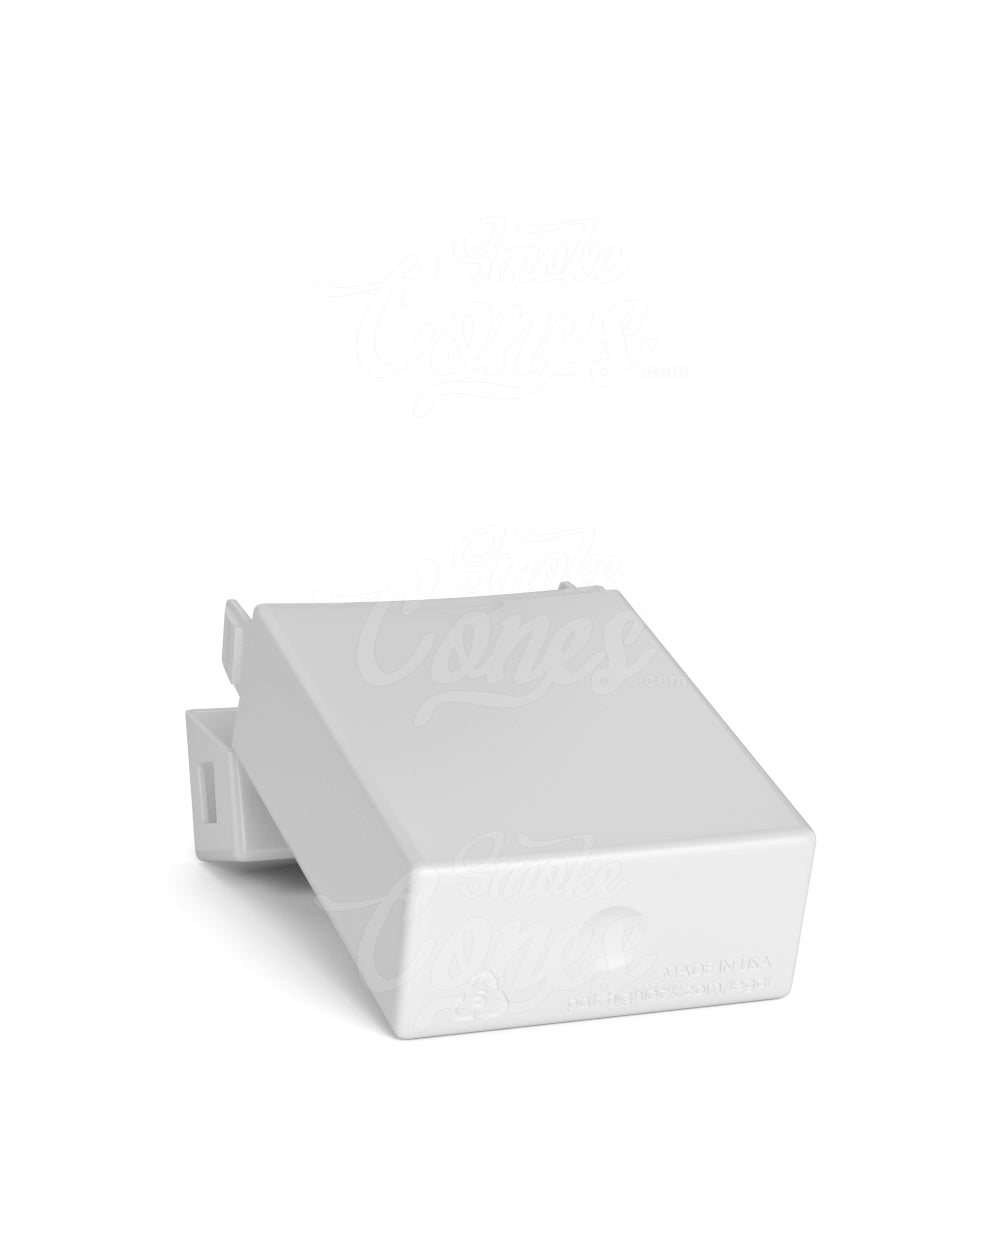 Premium 84 MM Clear Pre Roll Packaging Box - Pinch N Flip (130 qty.)